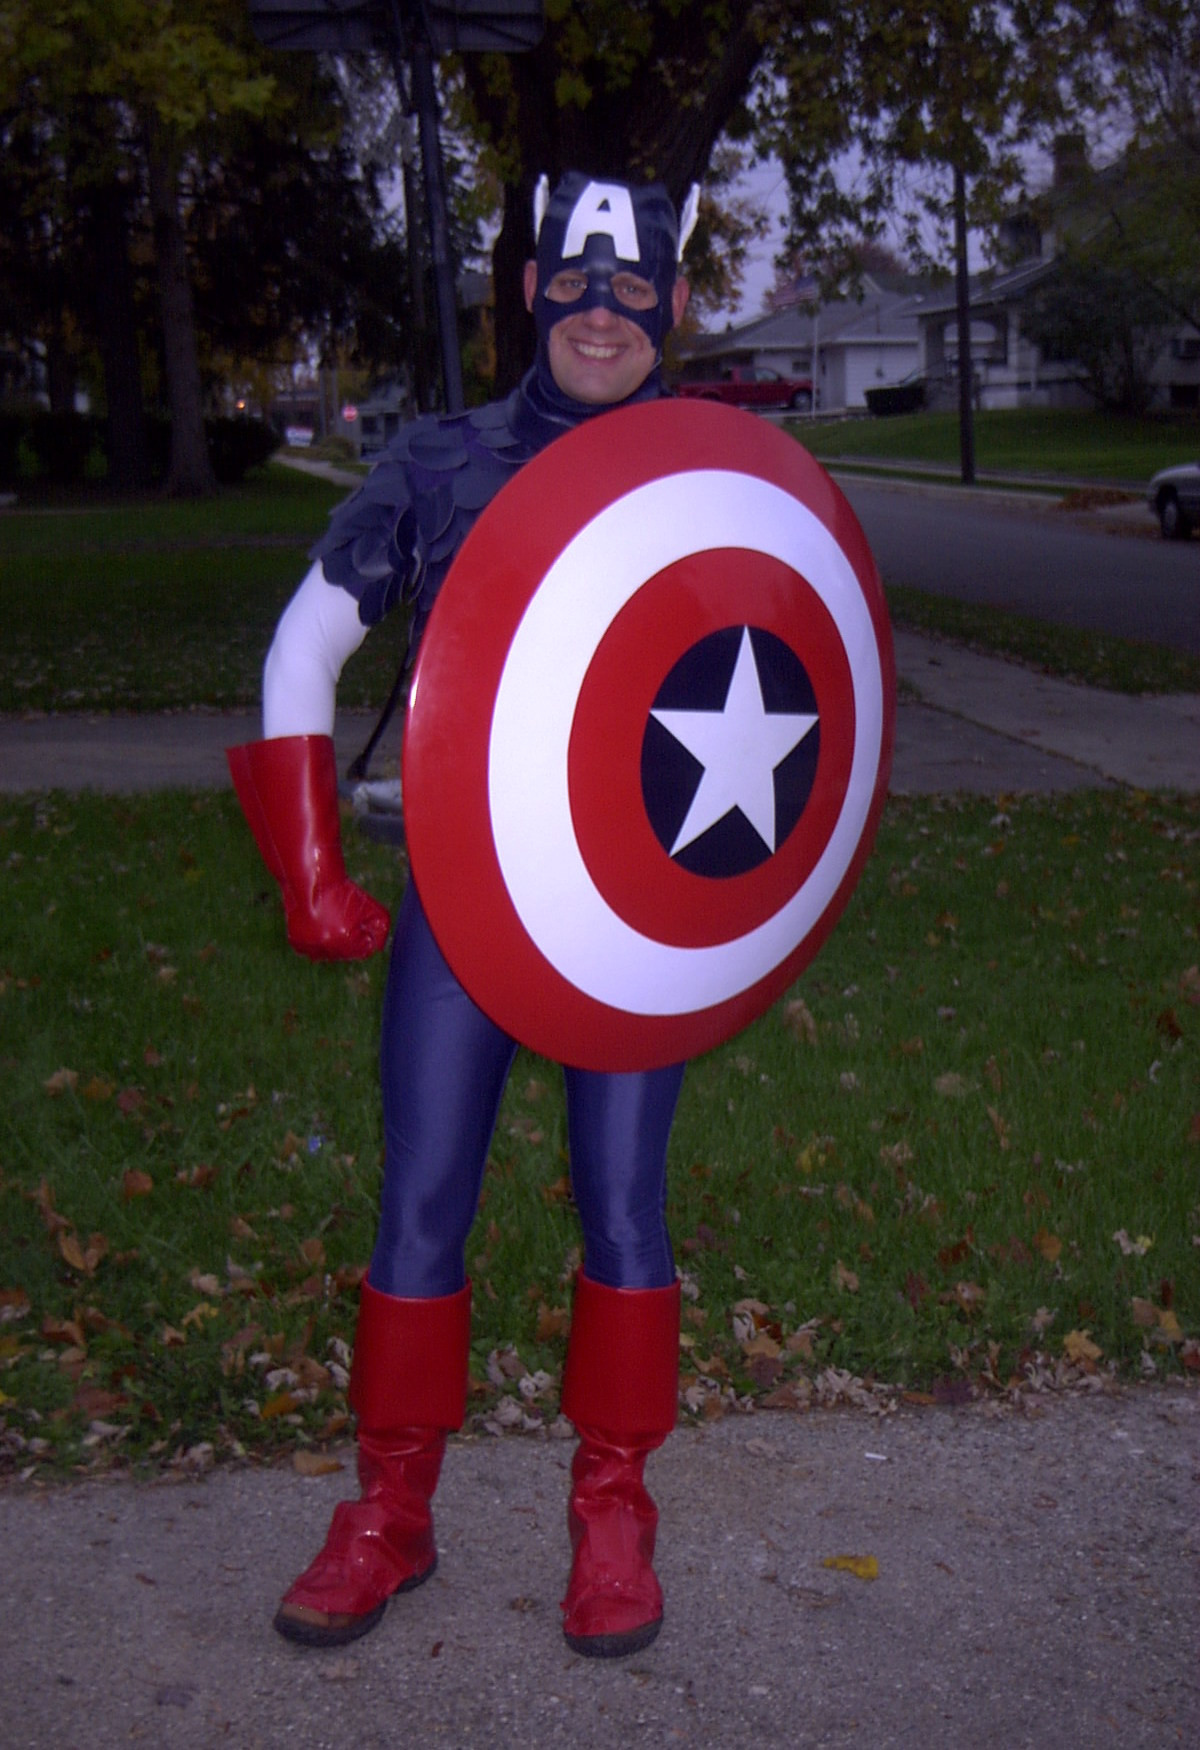 Best ideas about Captain America Costume DIY
. Save or Pin Captain America Halloween Costume Now.